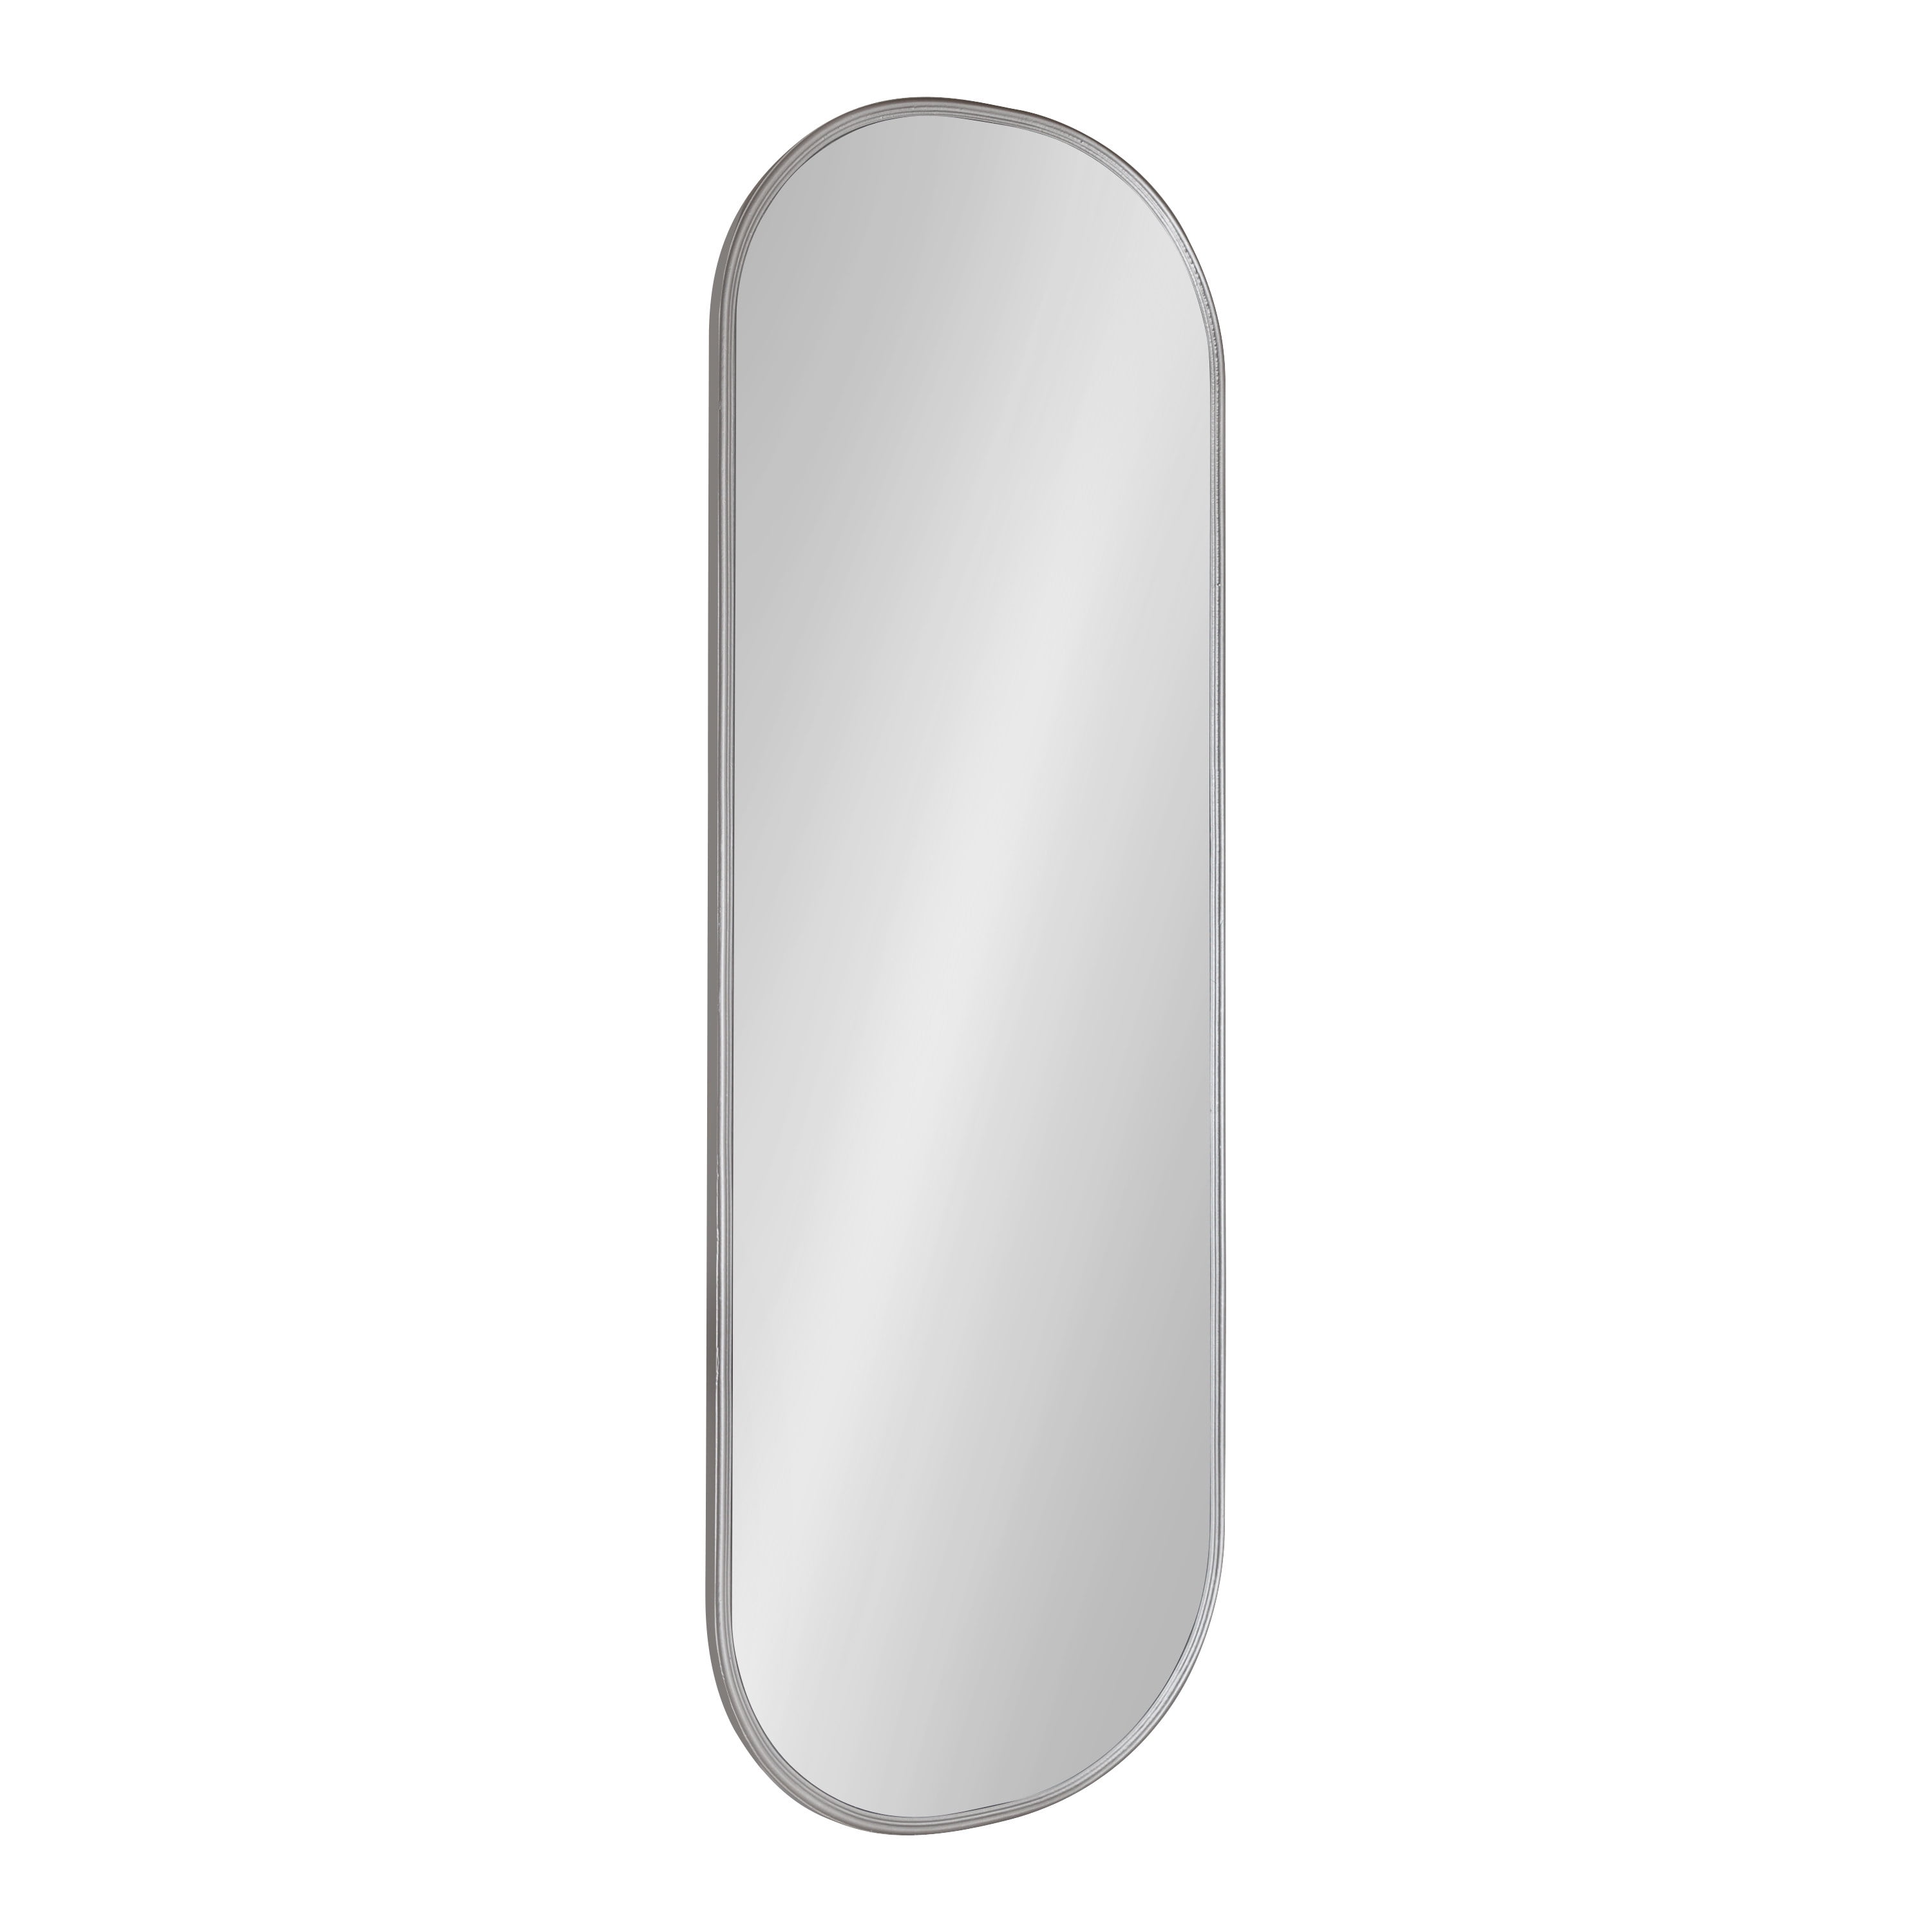 Simplici-T Shatterproof Mirror